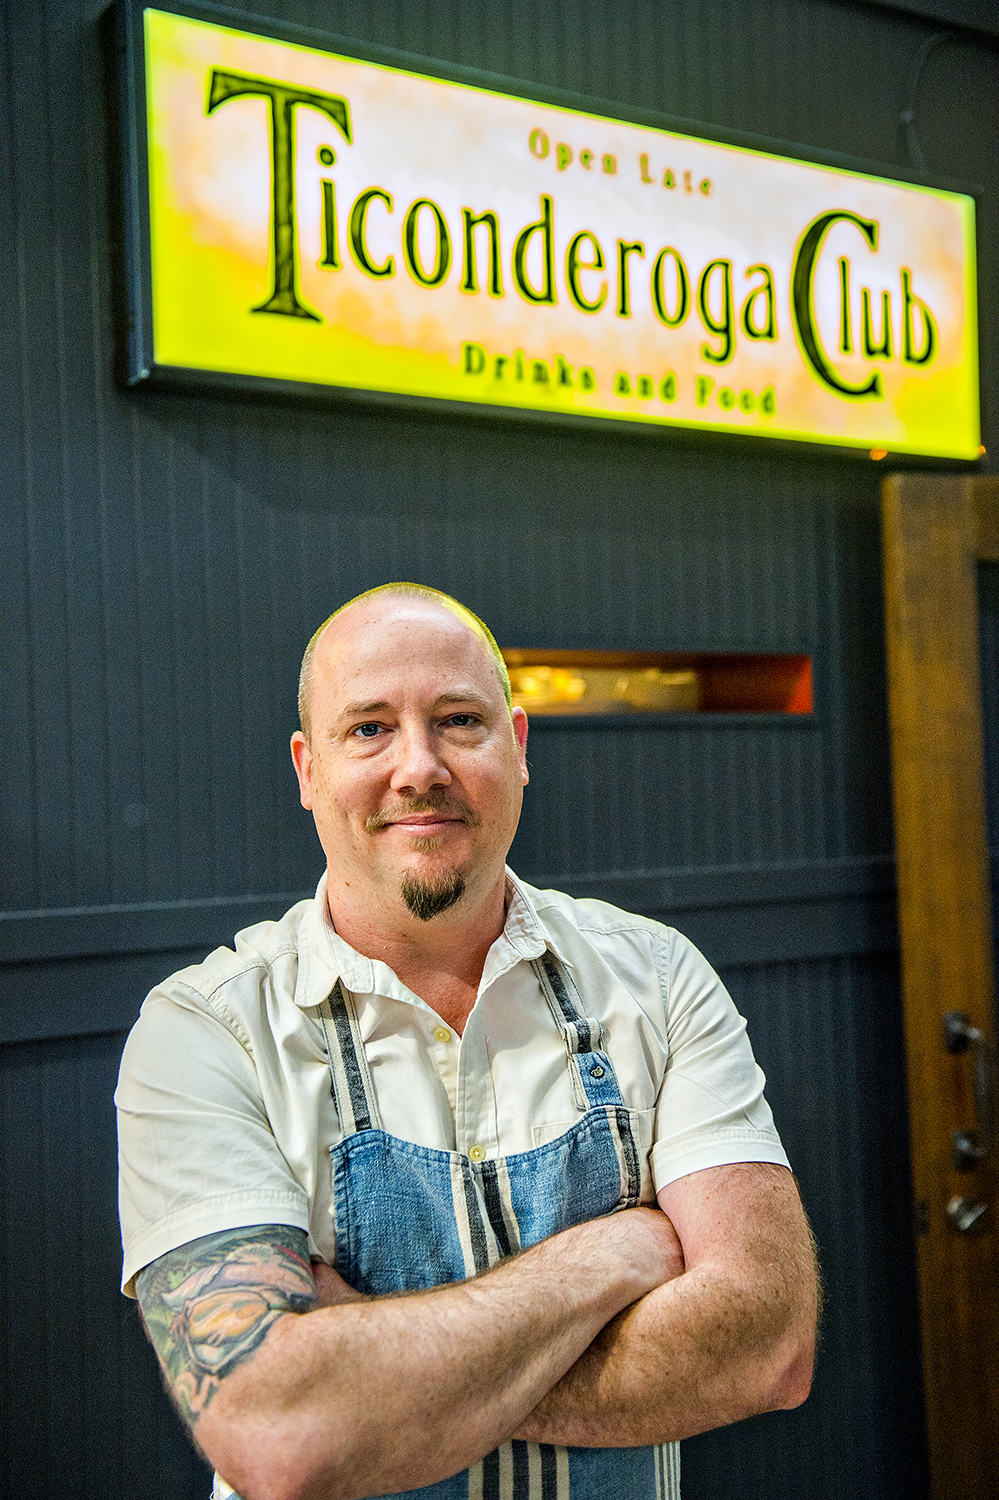 Ticonderoga Club executive chef David Bies.